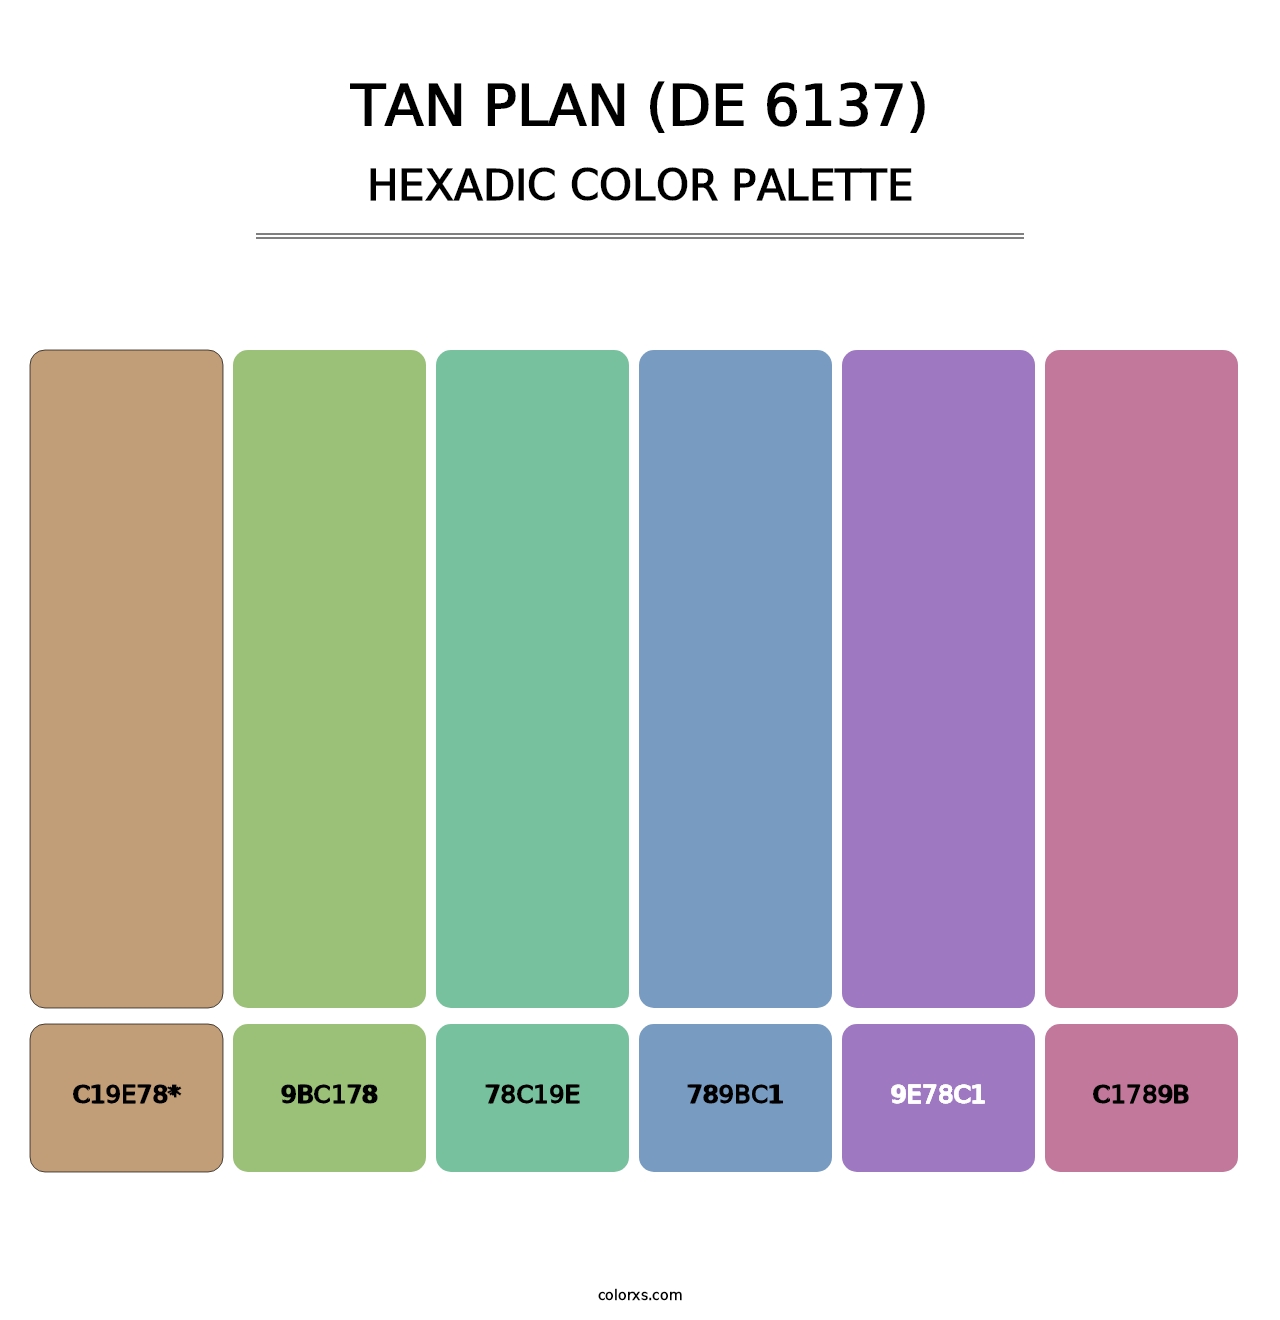 Tan Plan (DE 6137) - Hexadic Color Palette